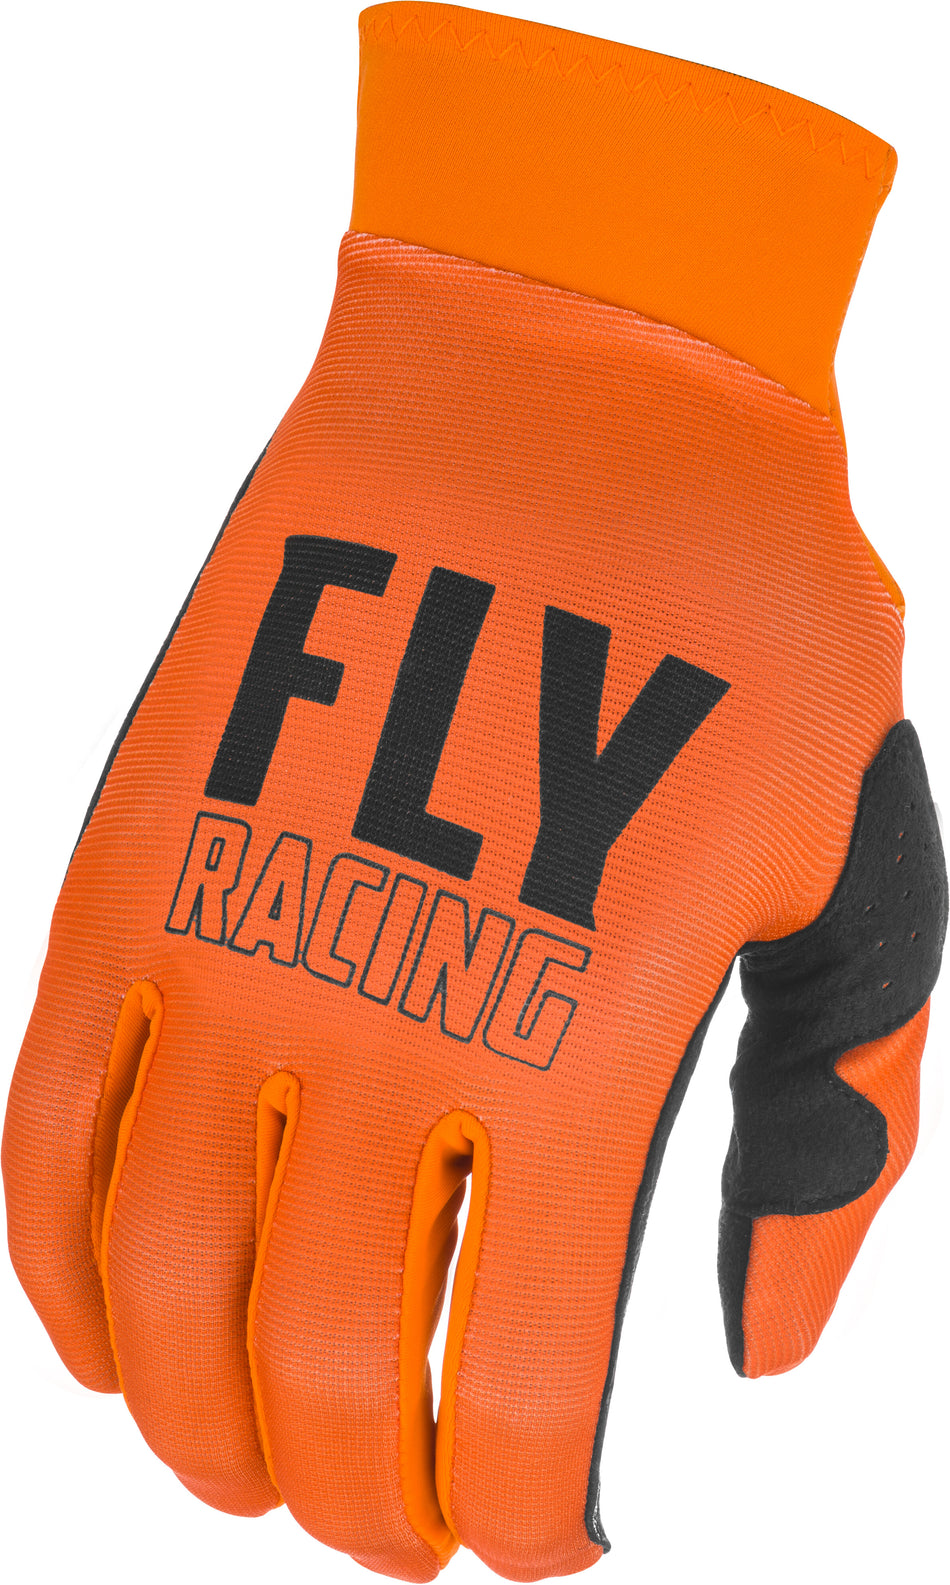 FLY RACING Pro Lite Gloves Orange/Black Sz 08 374-85808